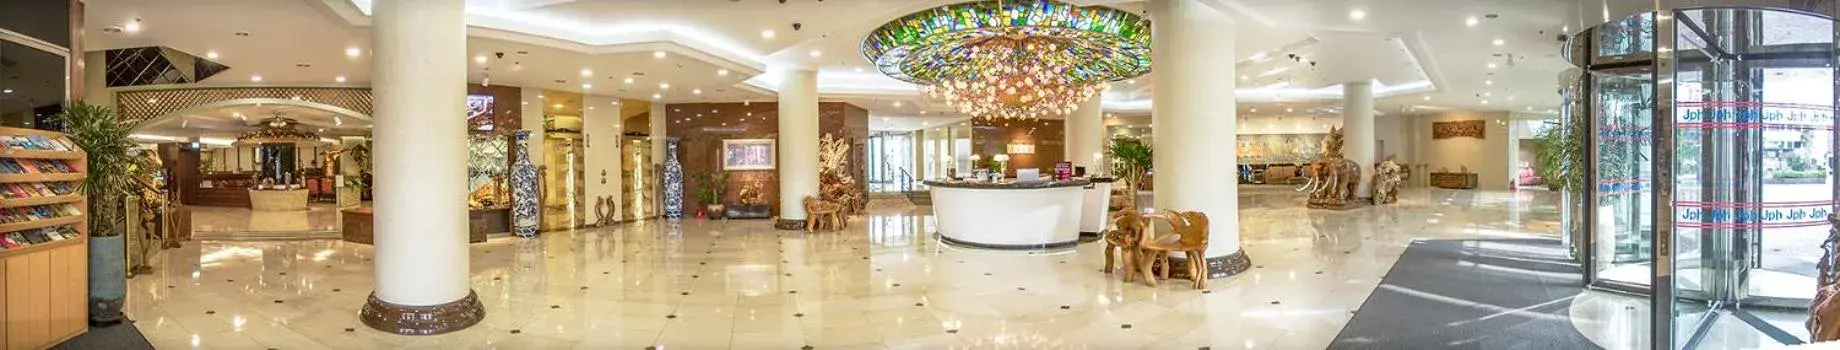 Lobby/Reception in Jeju Pacific Hotel